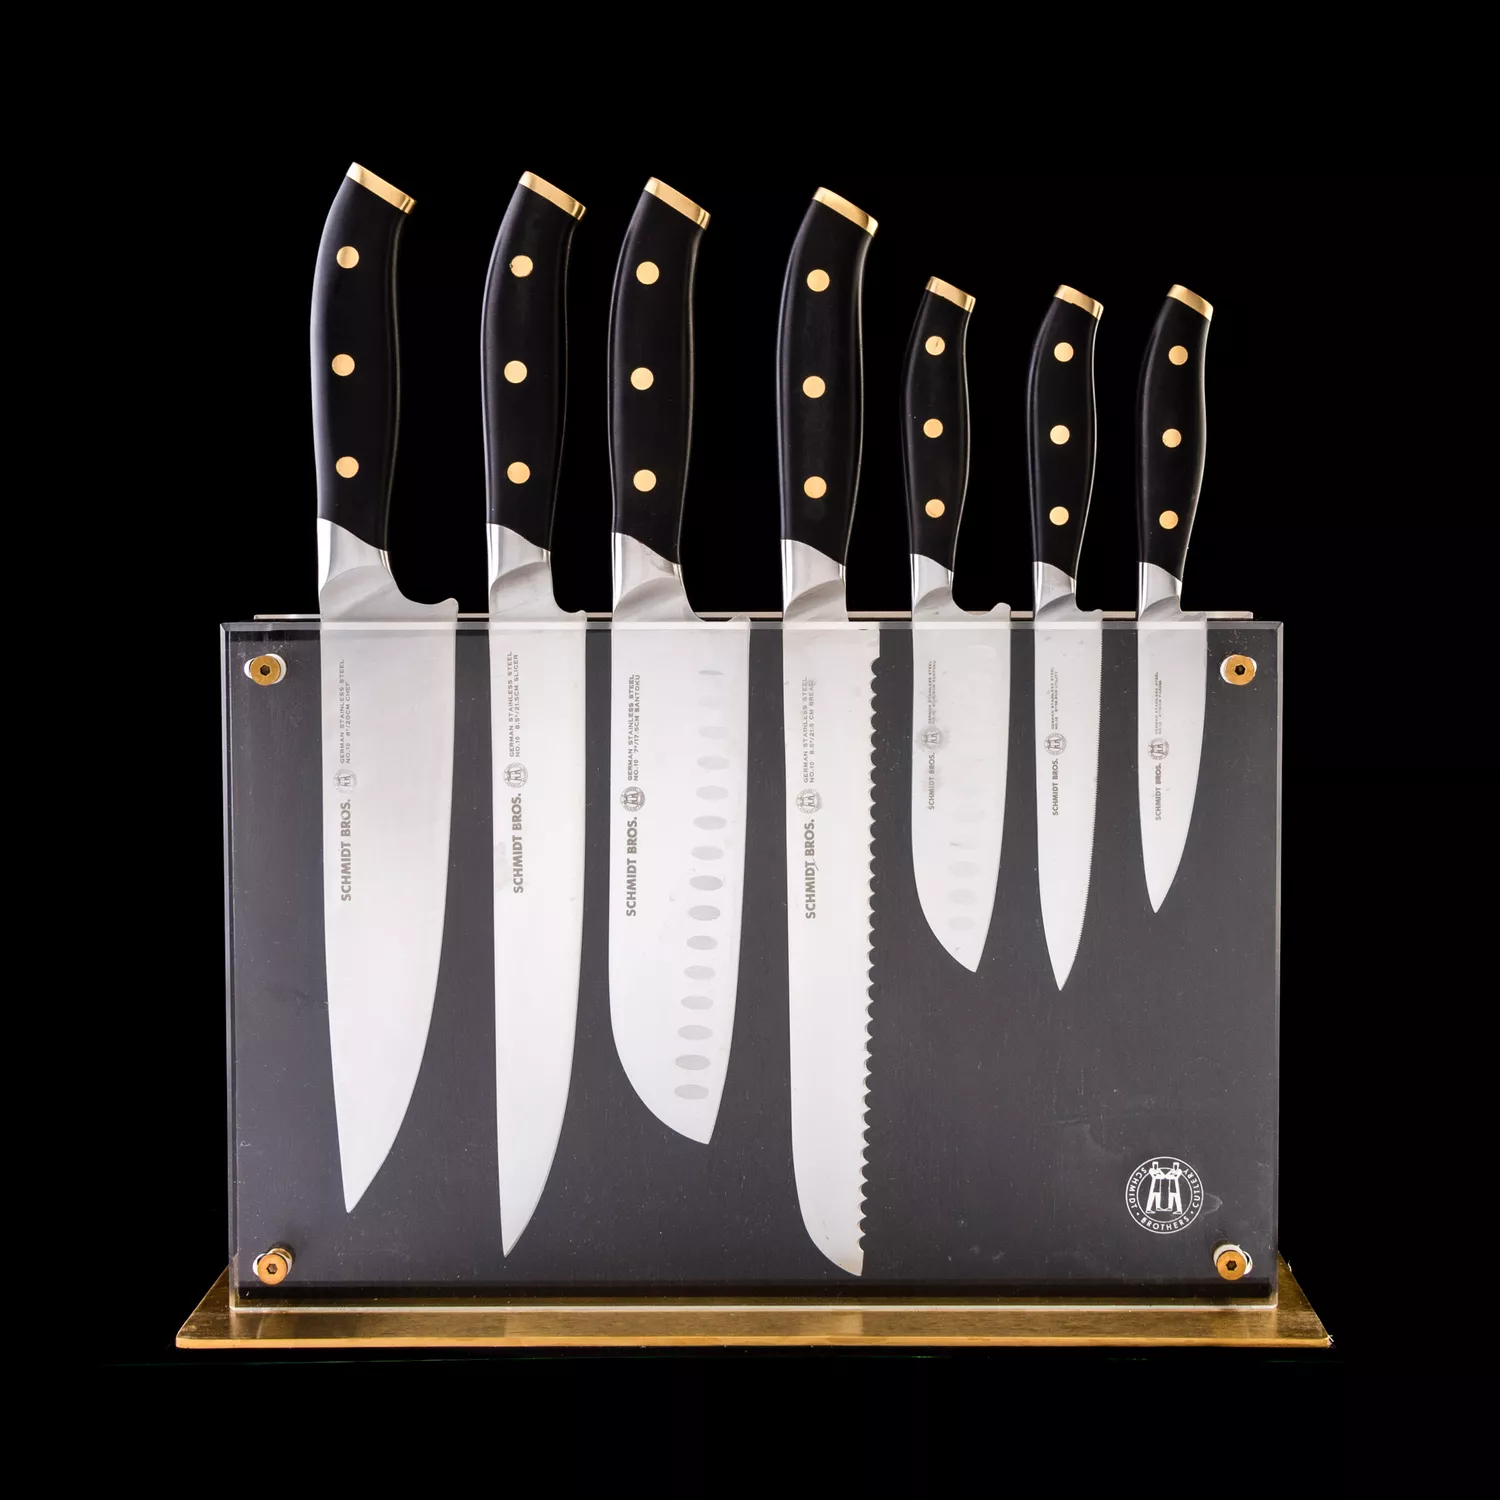 BergHOFF 8pc Nonstick Serrated Steak Knife Set 8.5, Dark Grey